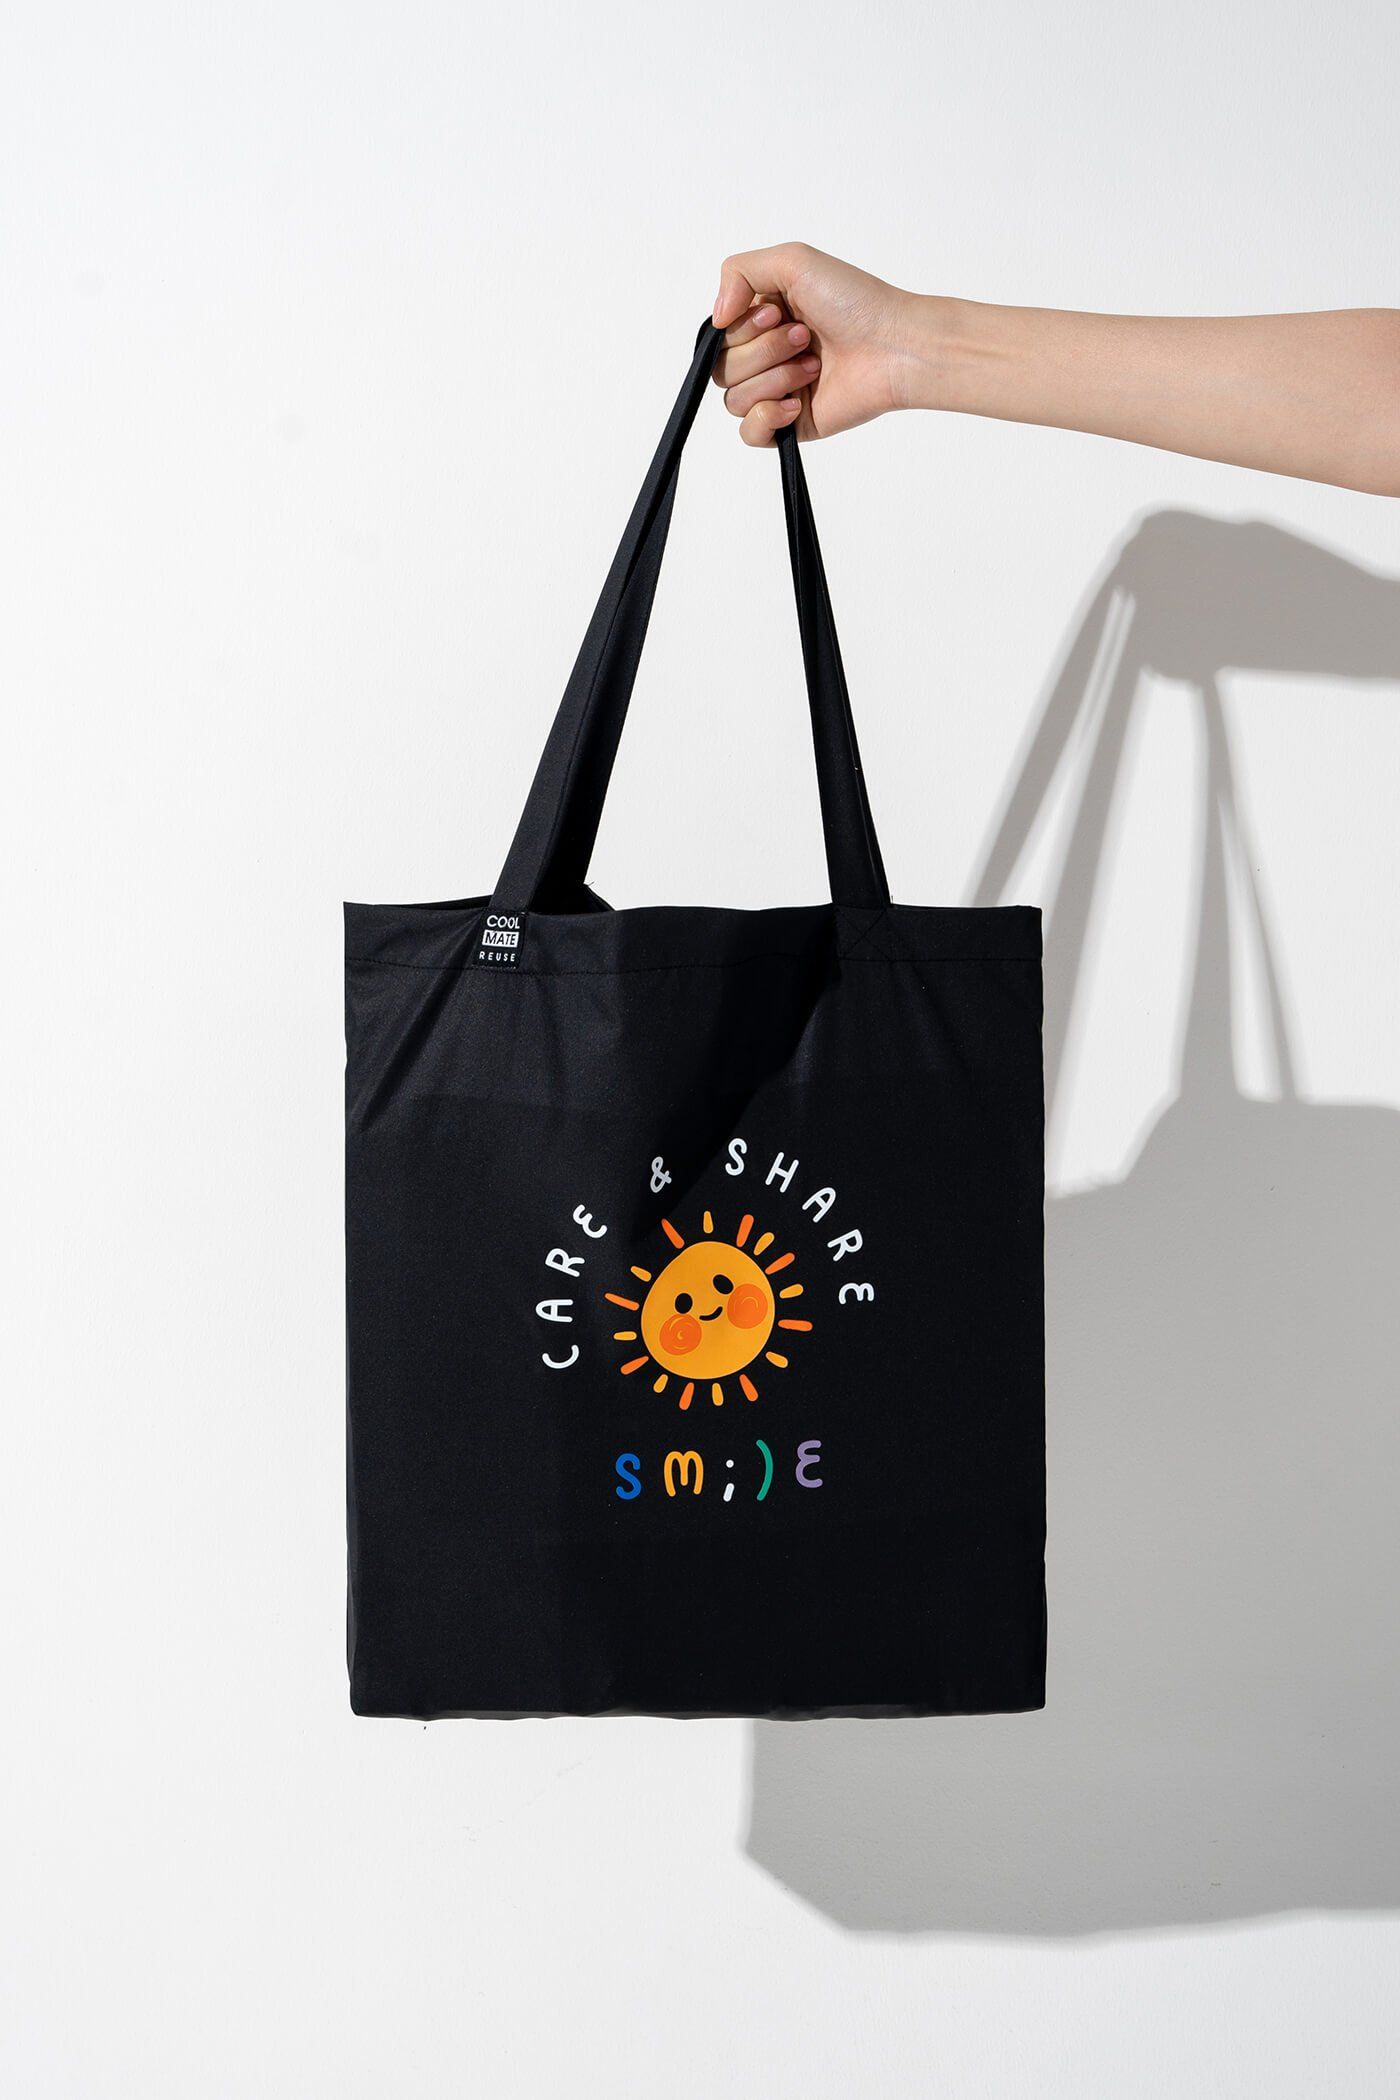 Smile Store - Túi Coolmate Clean Bag in mặt trời  1